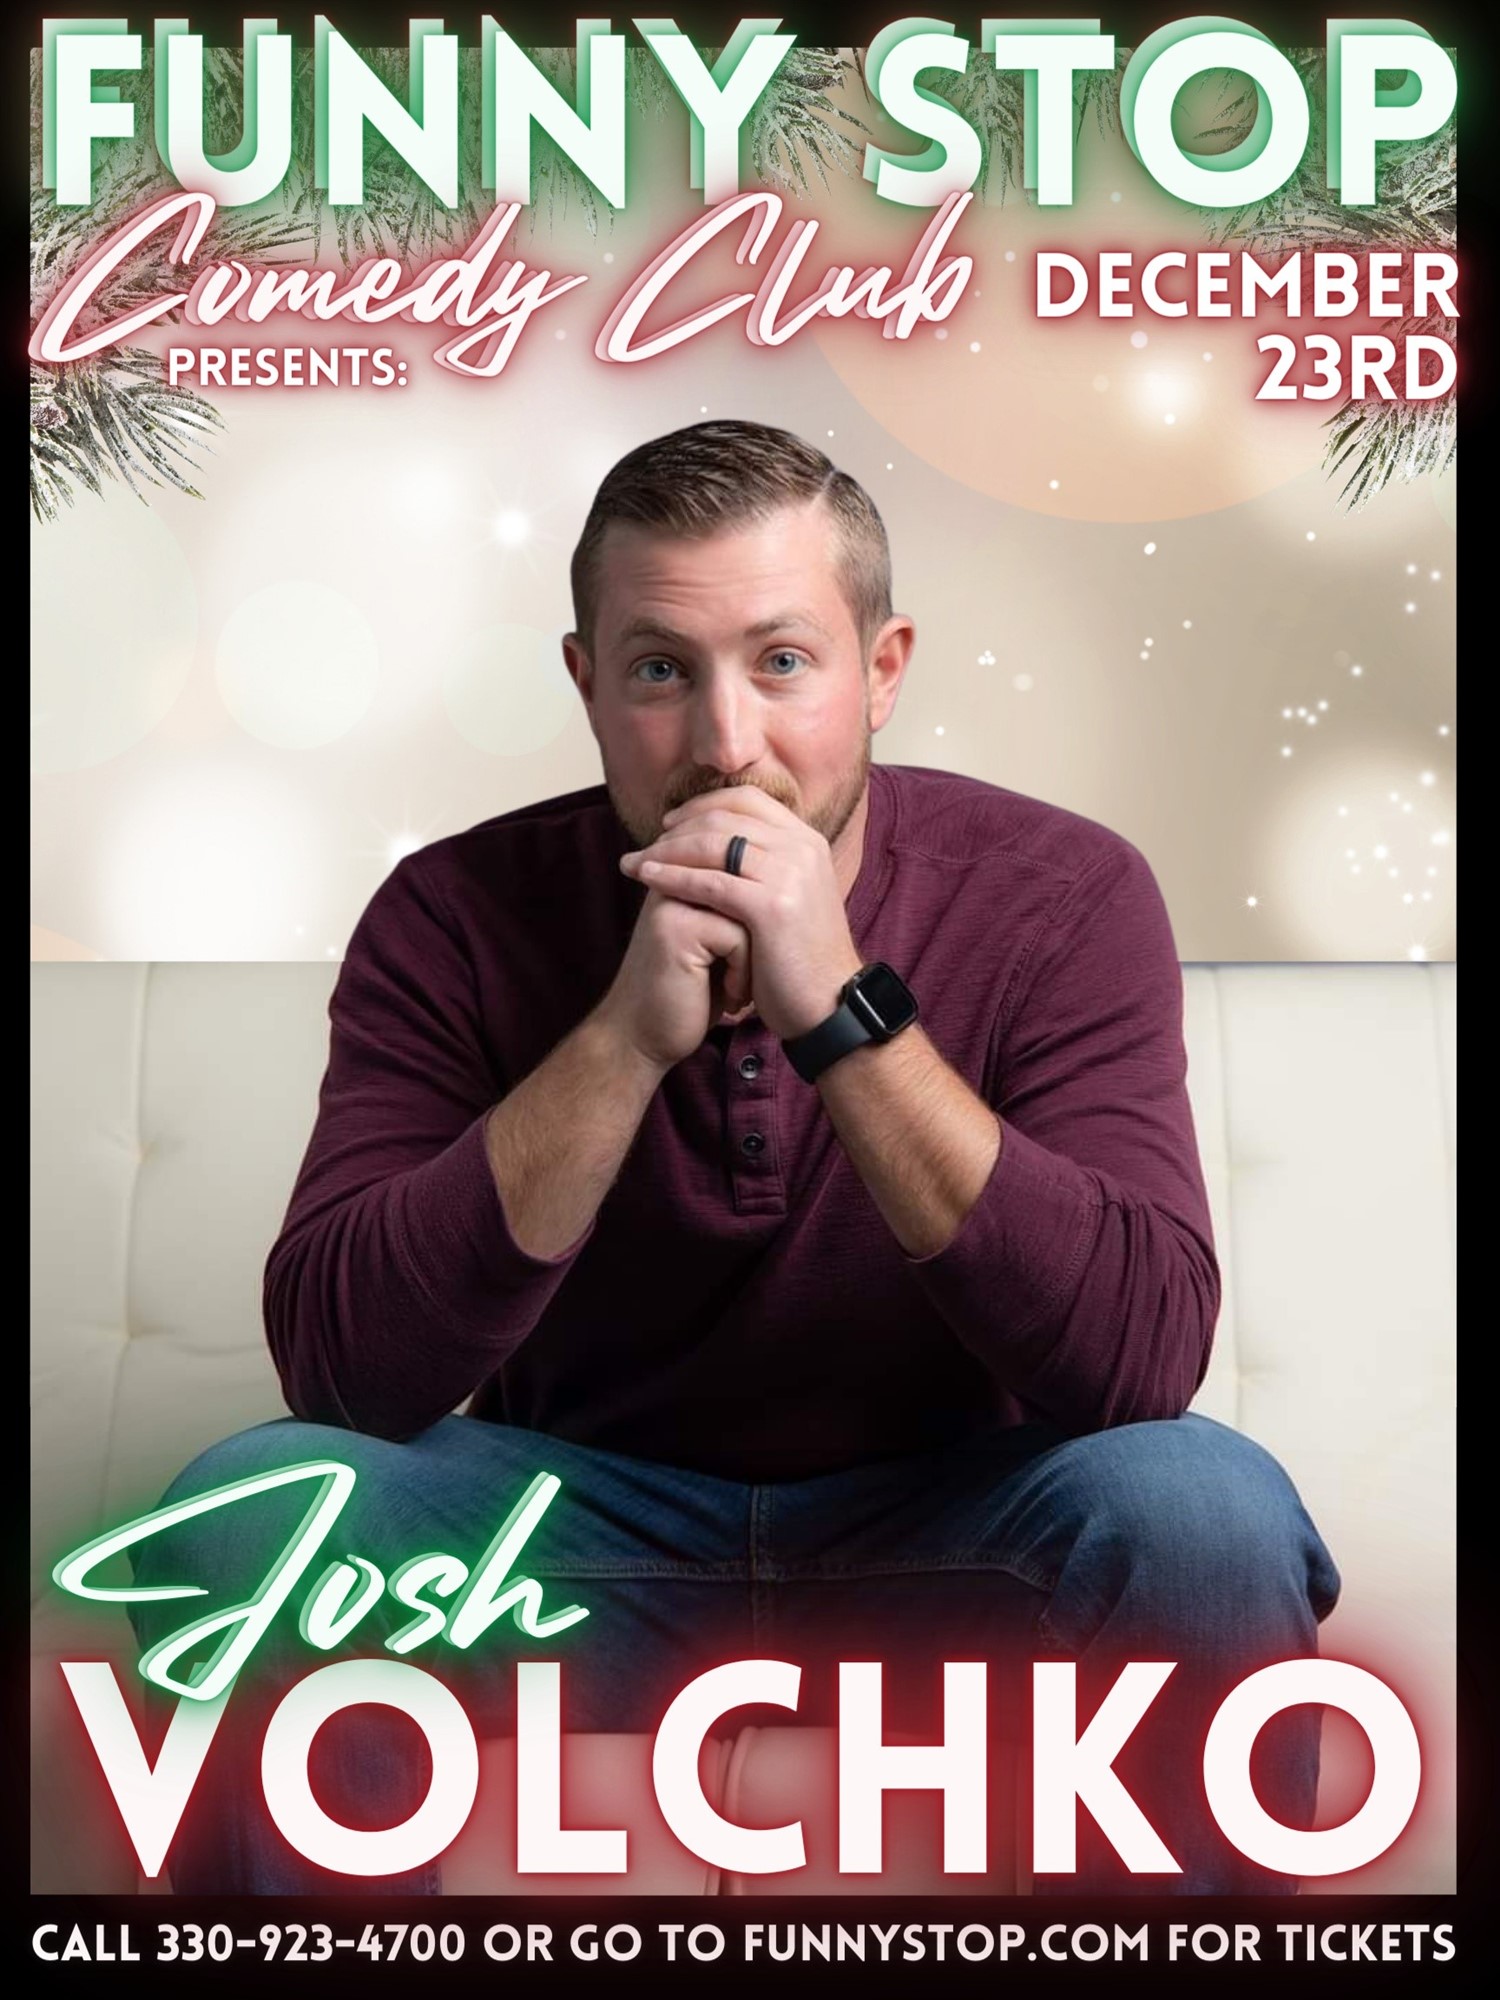 Josh Volchko 9:20pm Show Funny Stop Comedy Club on dic. 23, 21:20@Funny Stop Comedy Club - Compra entradas y obtén información enFunny Stop funnystop.online